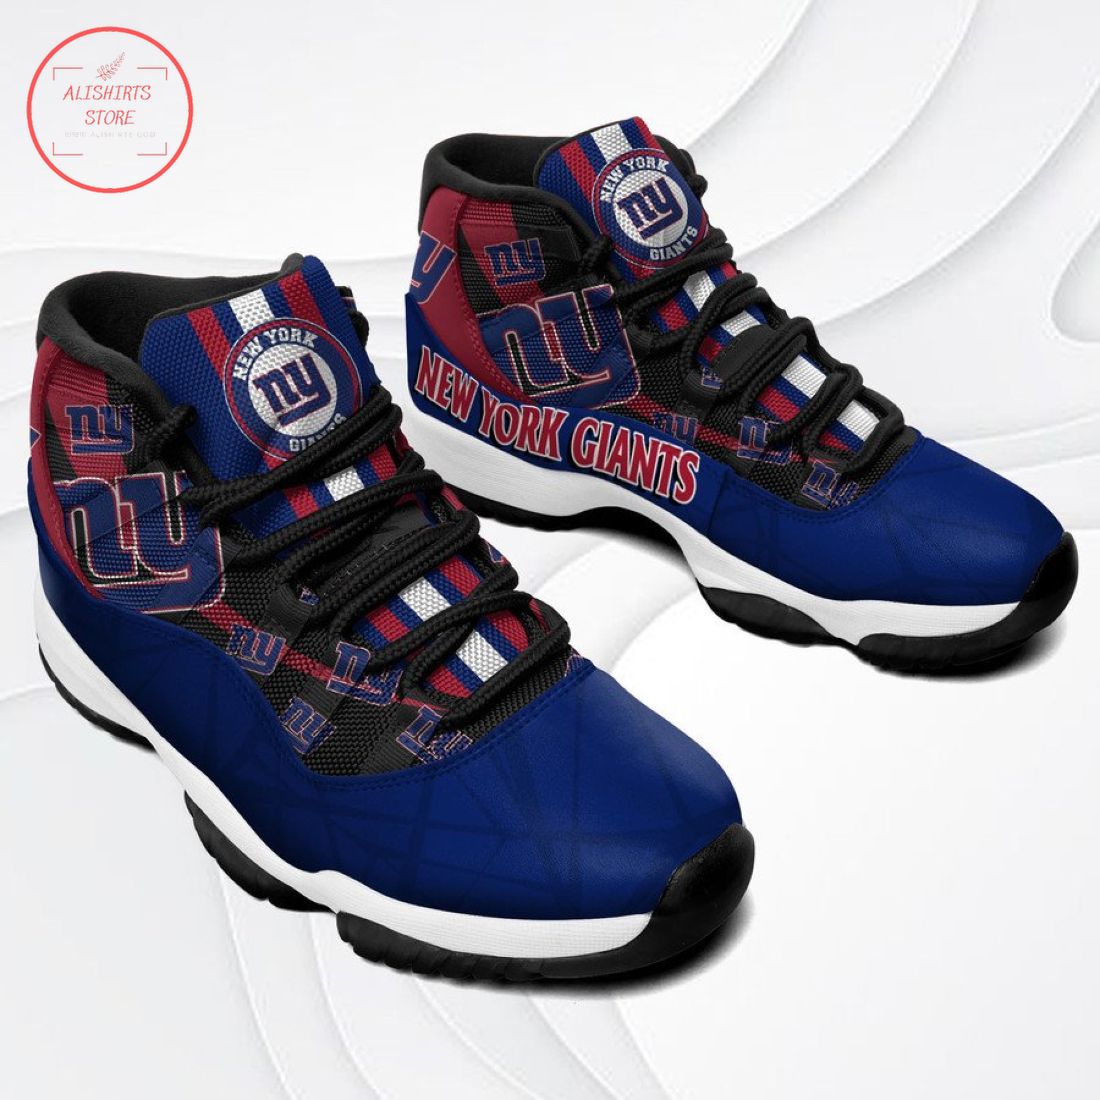 NFL New York Giants New Air Jordan 11 Sneakers Shoes